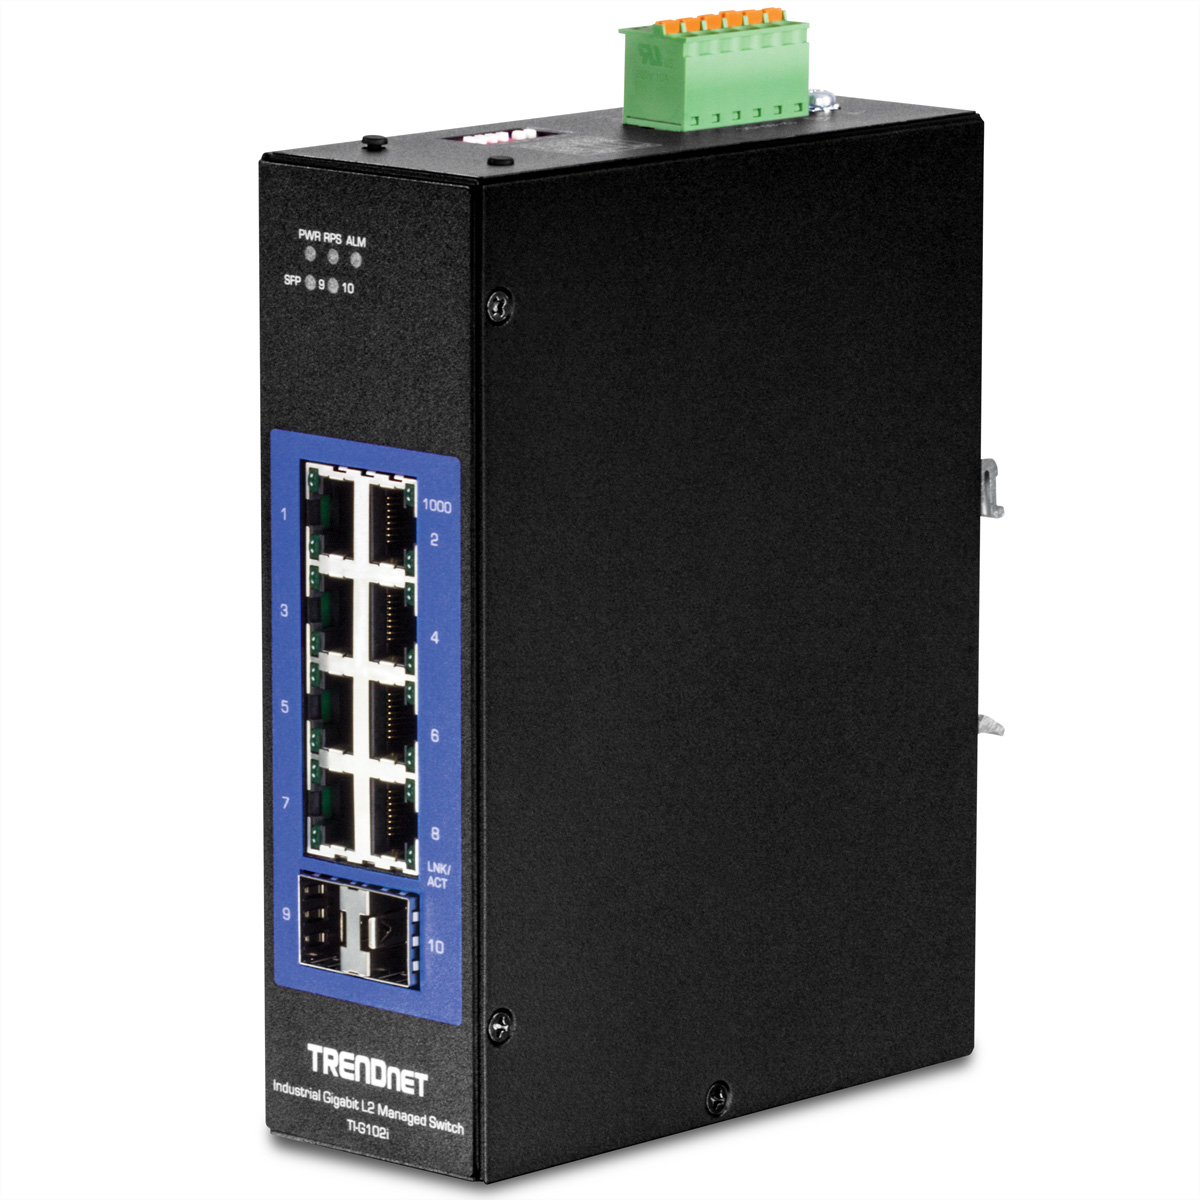 Switch TI-G102i Gigabit 10-Port Switch DIN-Rail TRENDNET Industrial Ethernet L2 Gigabit